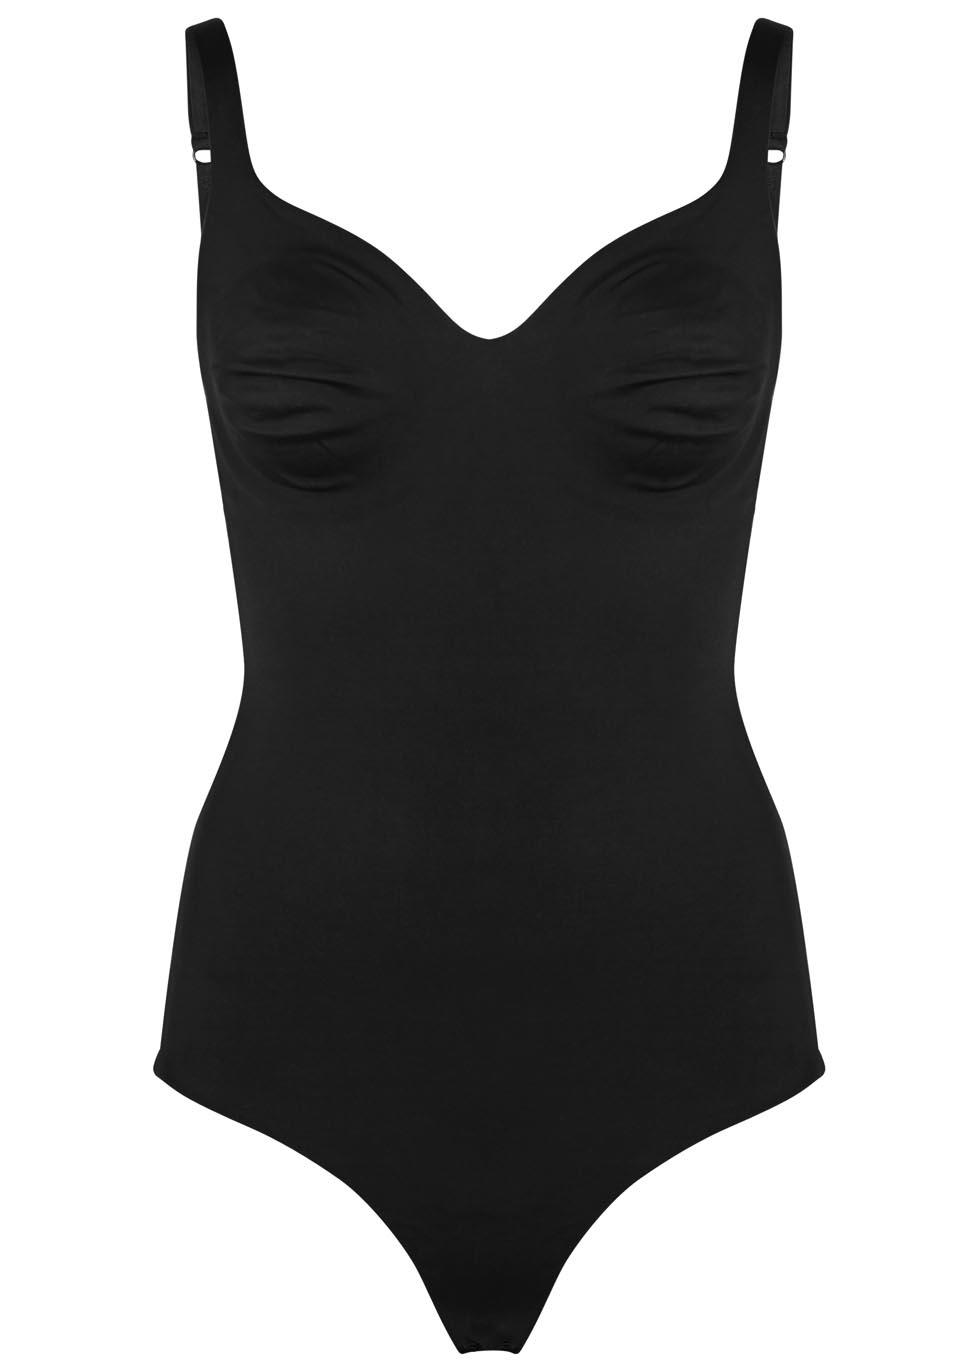 Wolford Mat De Luxe black forming bodysuit - unique designing - only